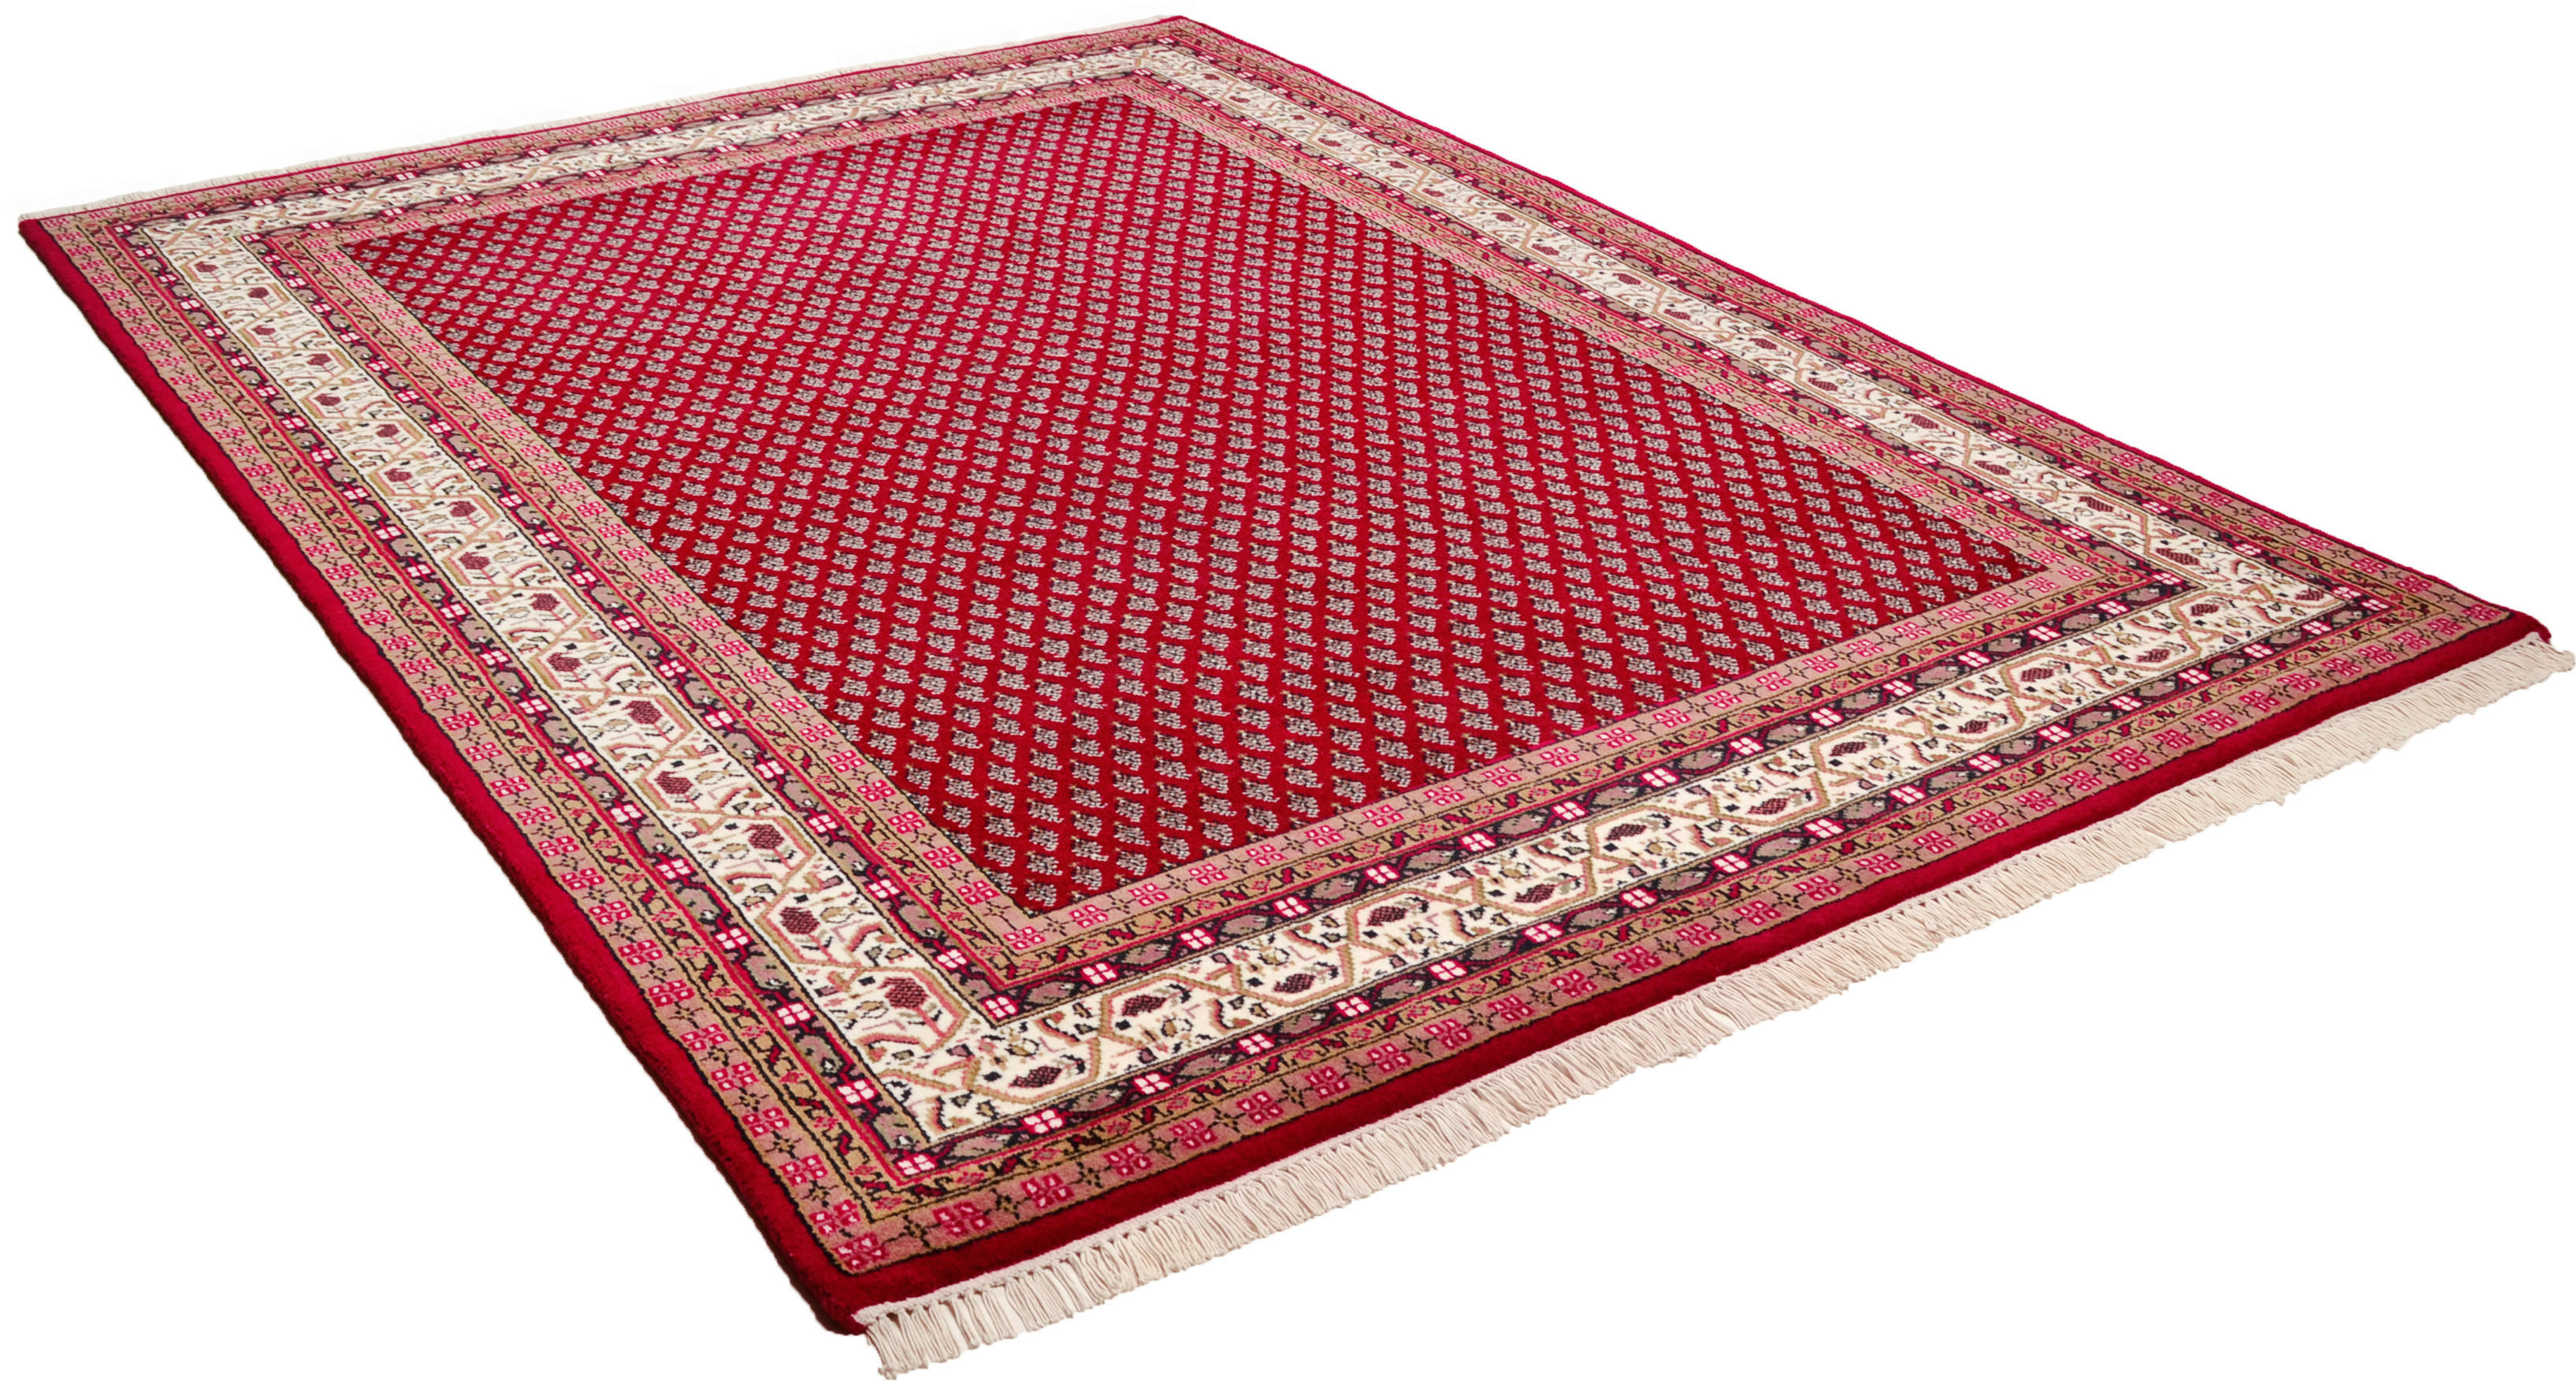 ORIENTALSKA PREPROGA  70/140 cm   krem, rdeča  - rdeča/krem, Konvencionalno, tekstil (70/140cm)